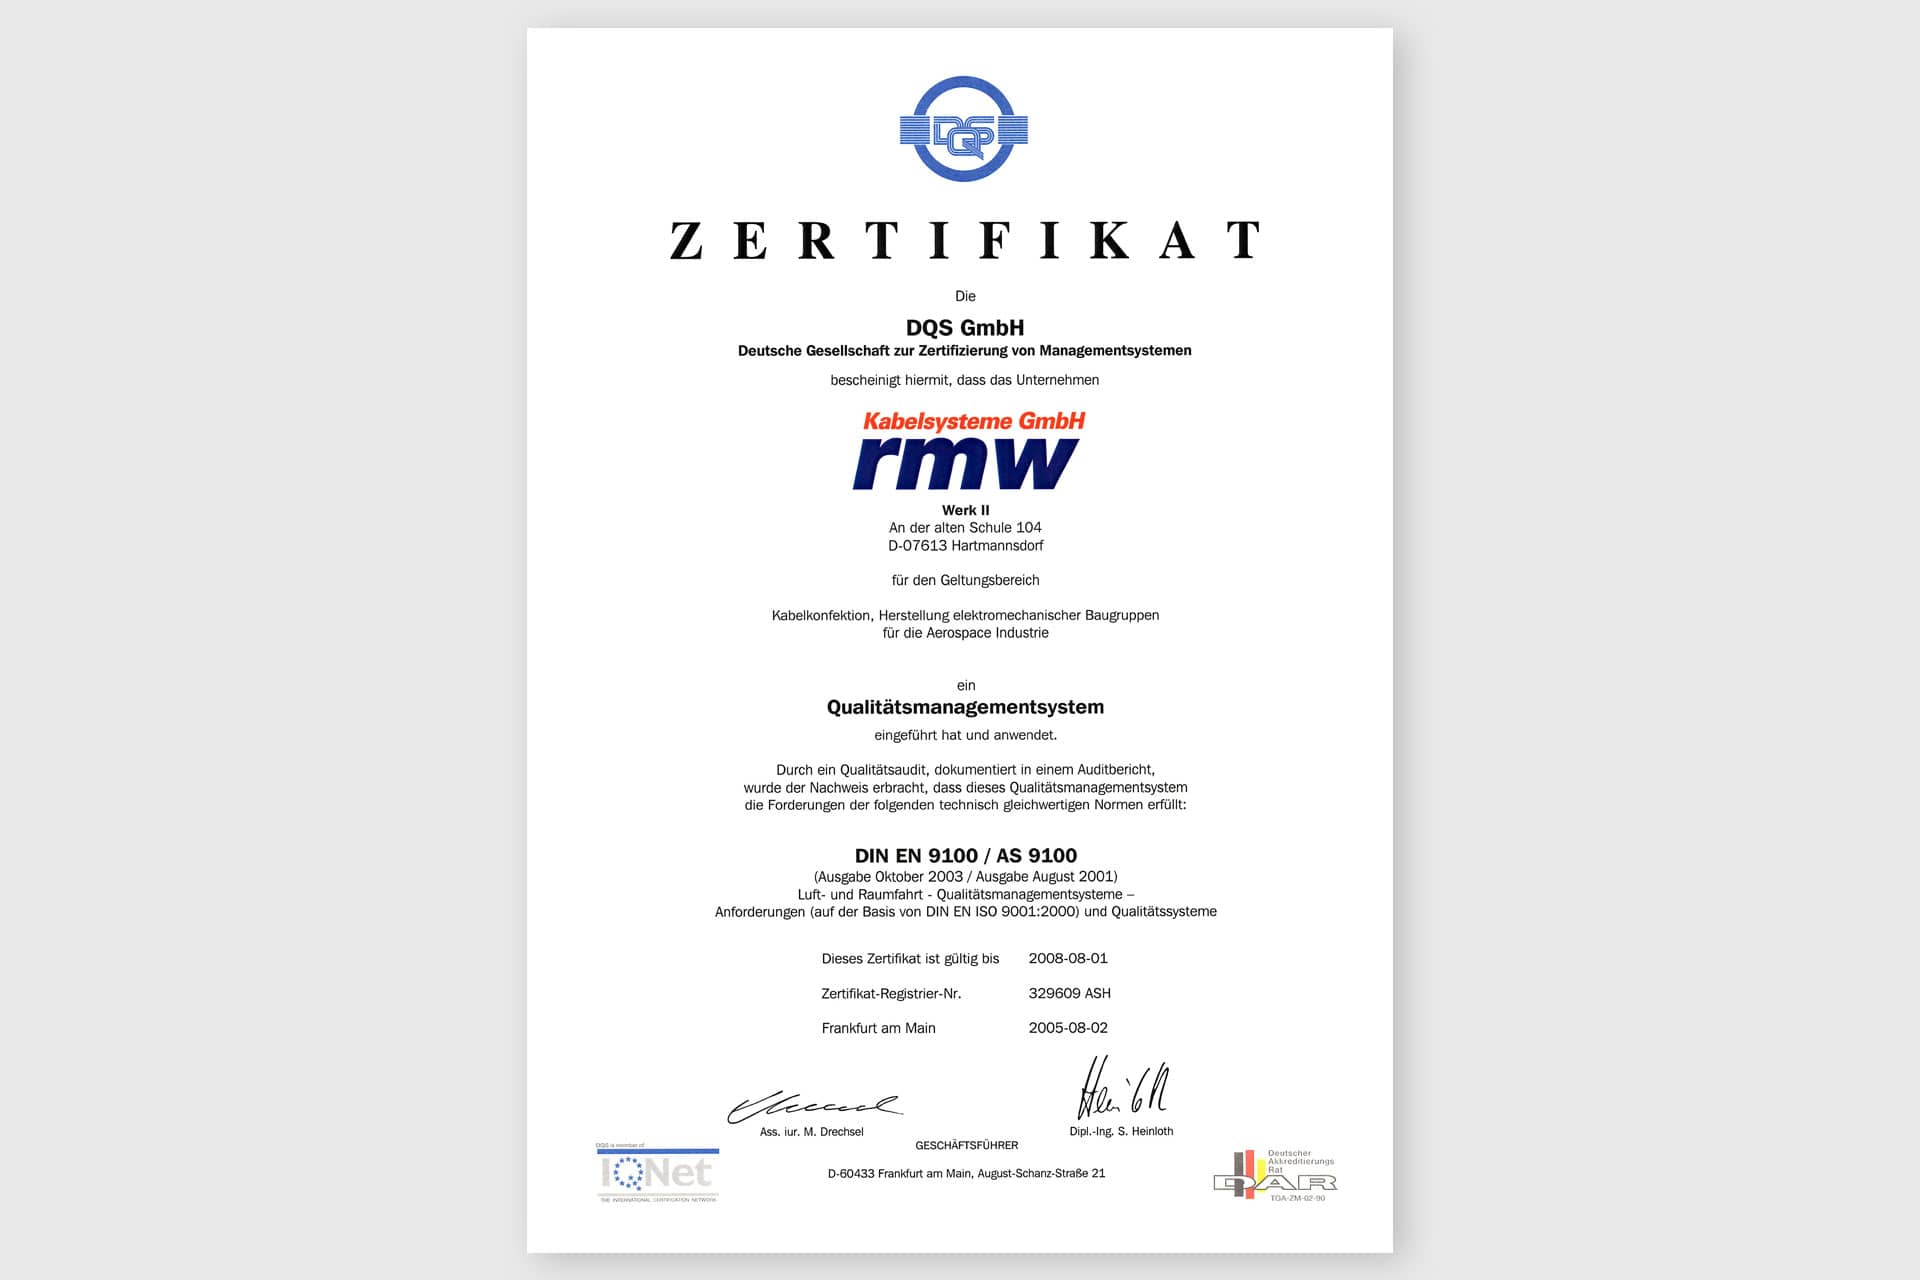 Document DIN EN 9100:2003 Certification